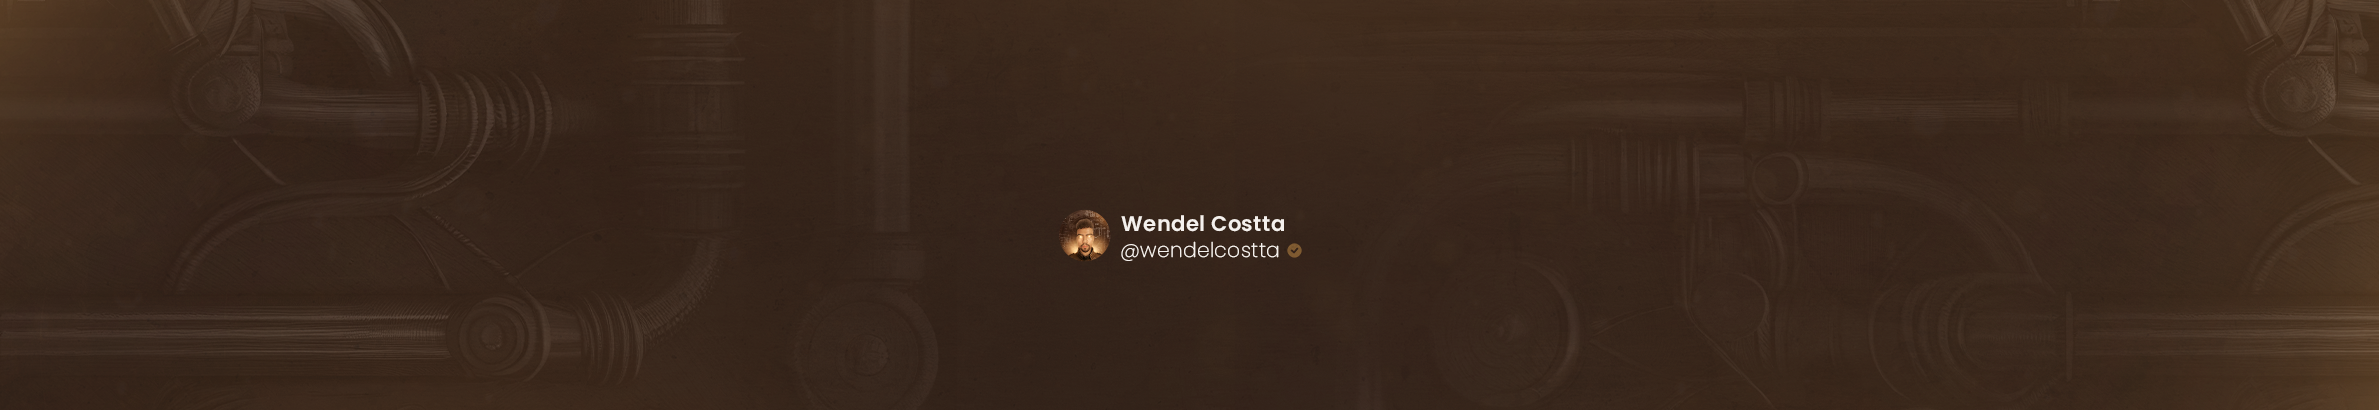 Wendel Costta's profile banner